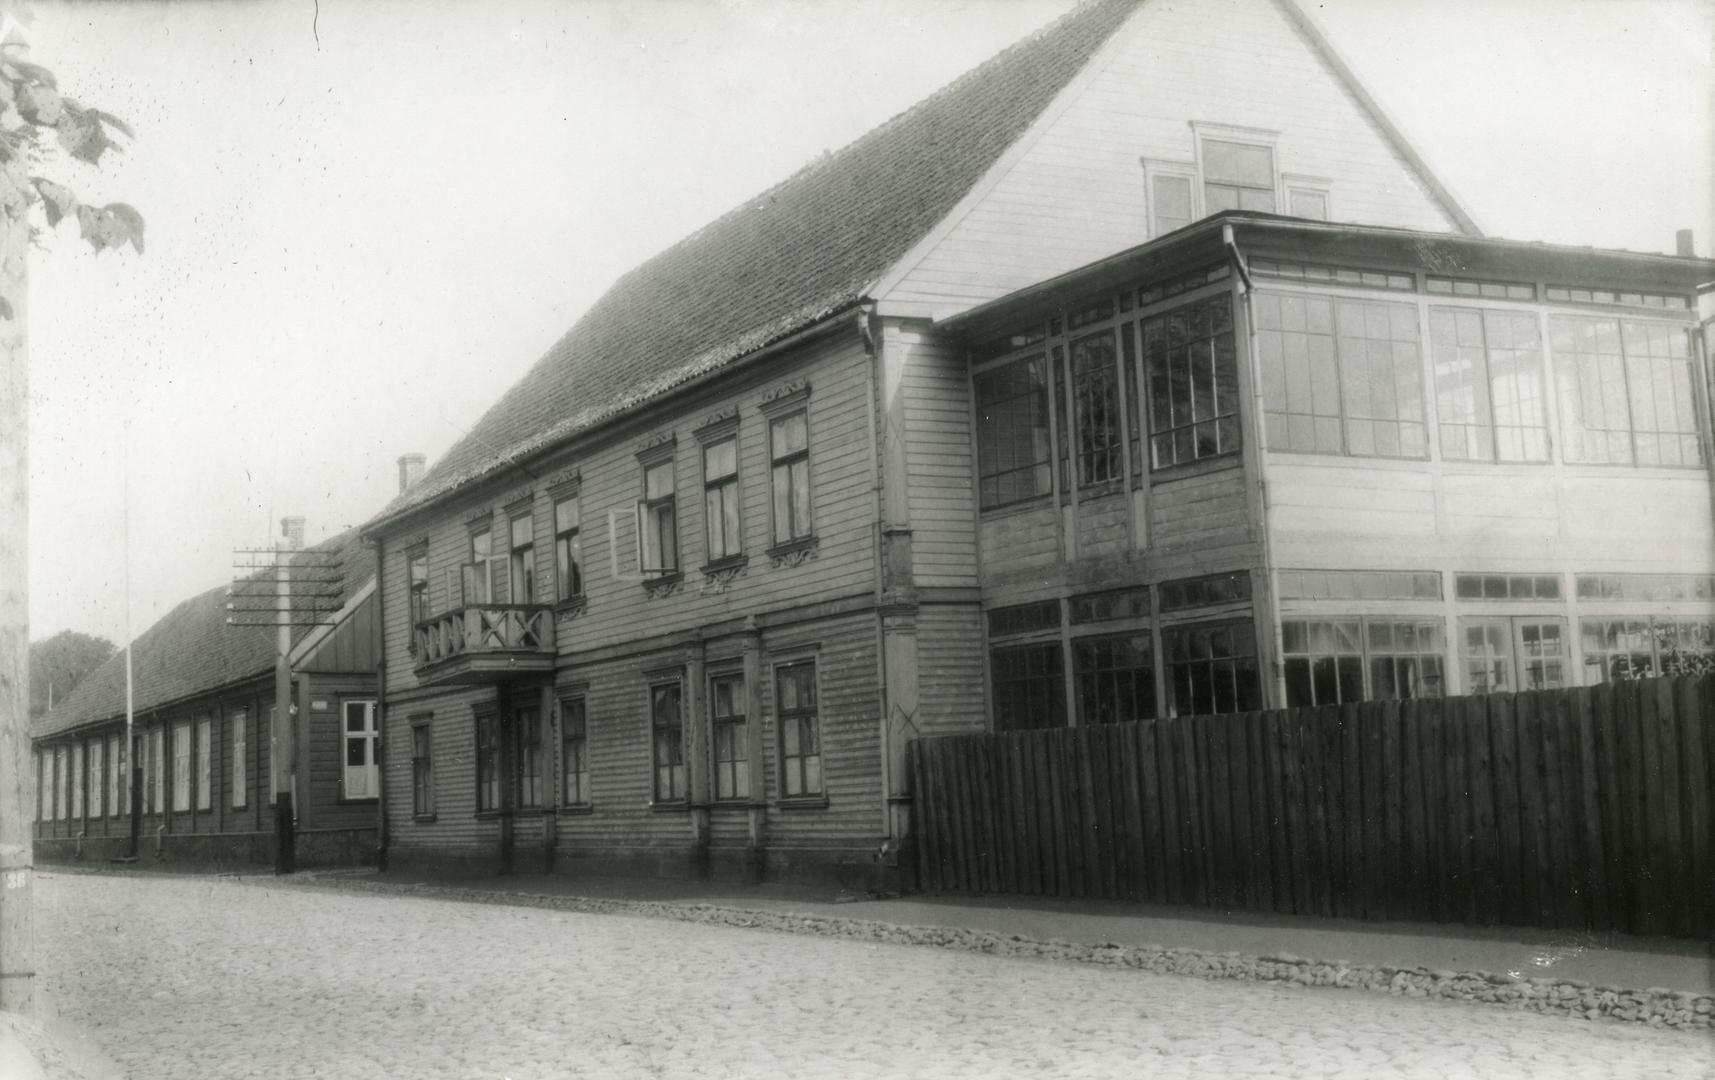 Pärnu City 5. Primary school building